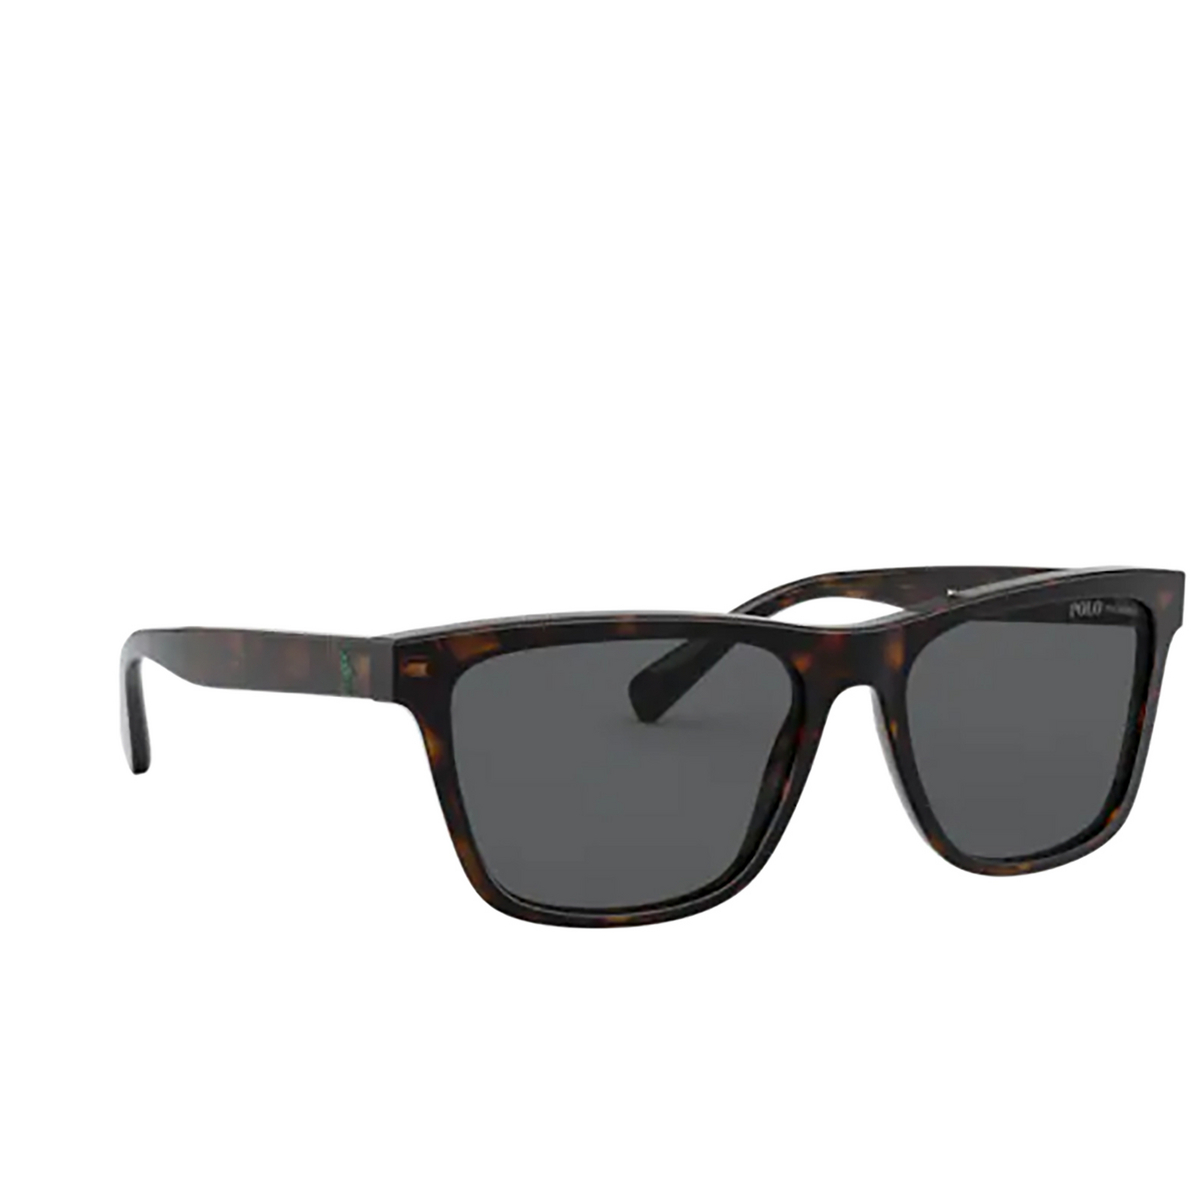 Polo Ralph Lauren® Square Sunglasses: PH4167 color Shiny Dark Havana 500387 - three-quarters view.